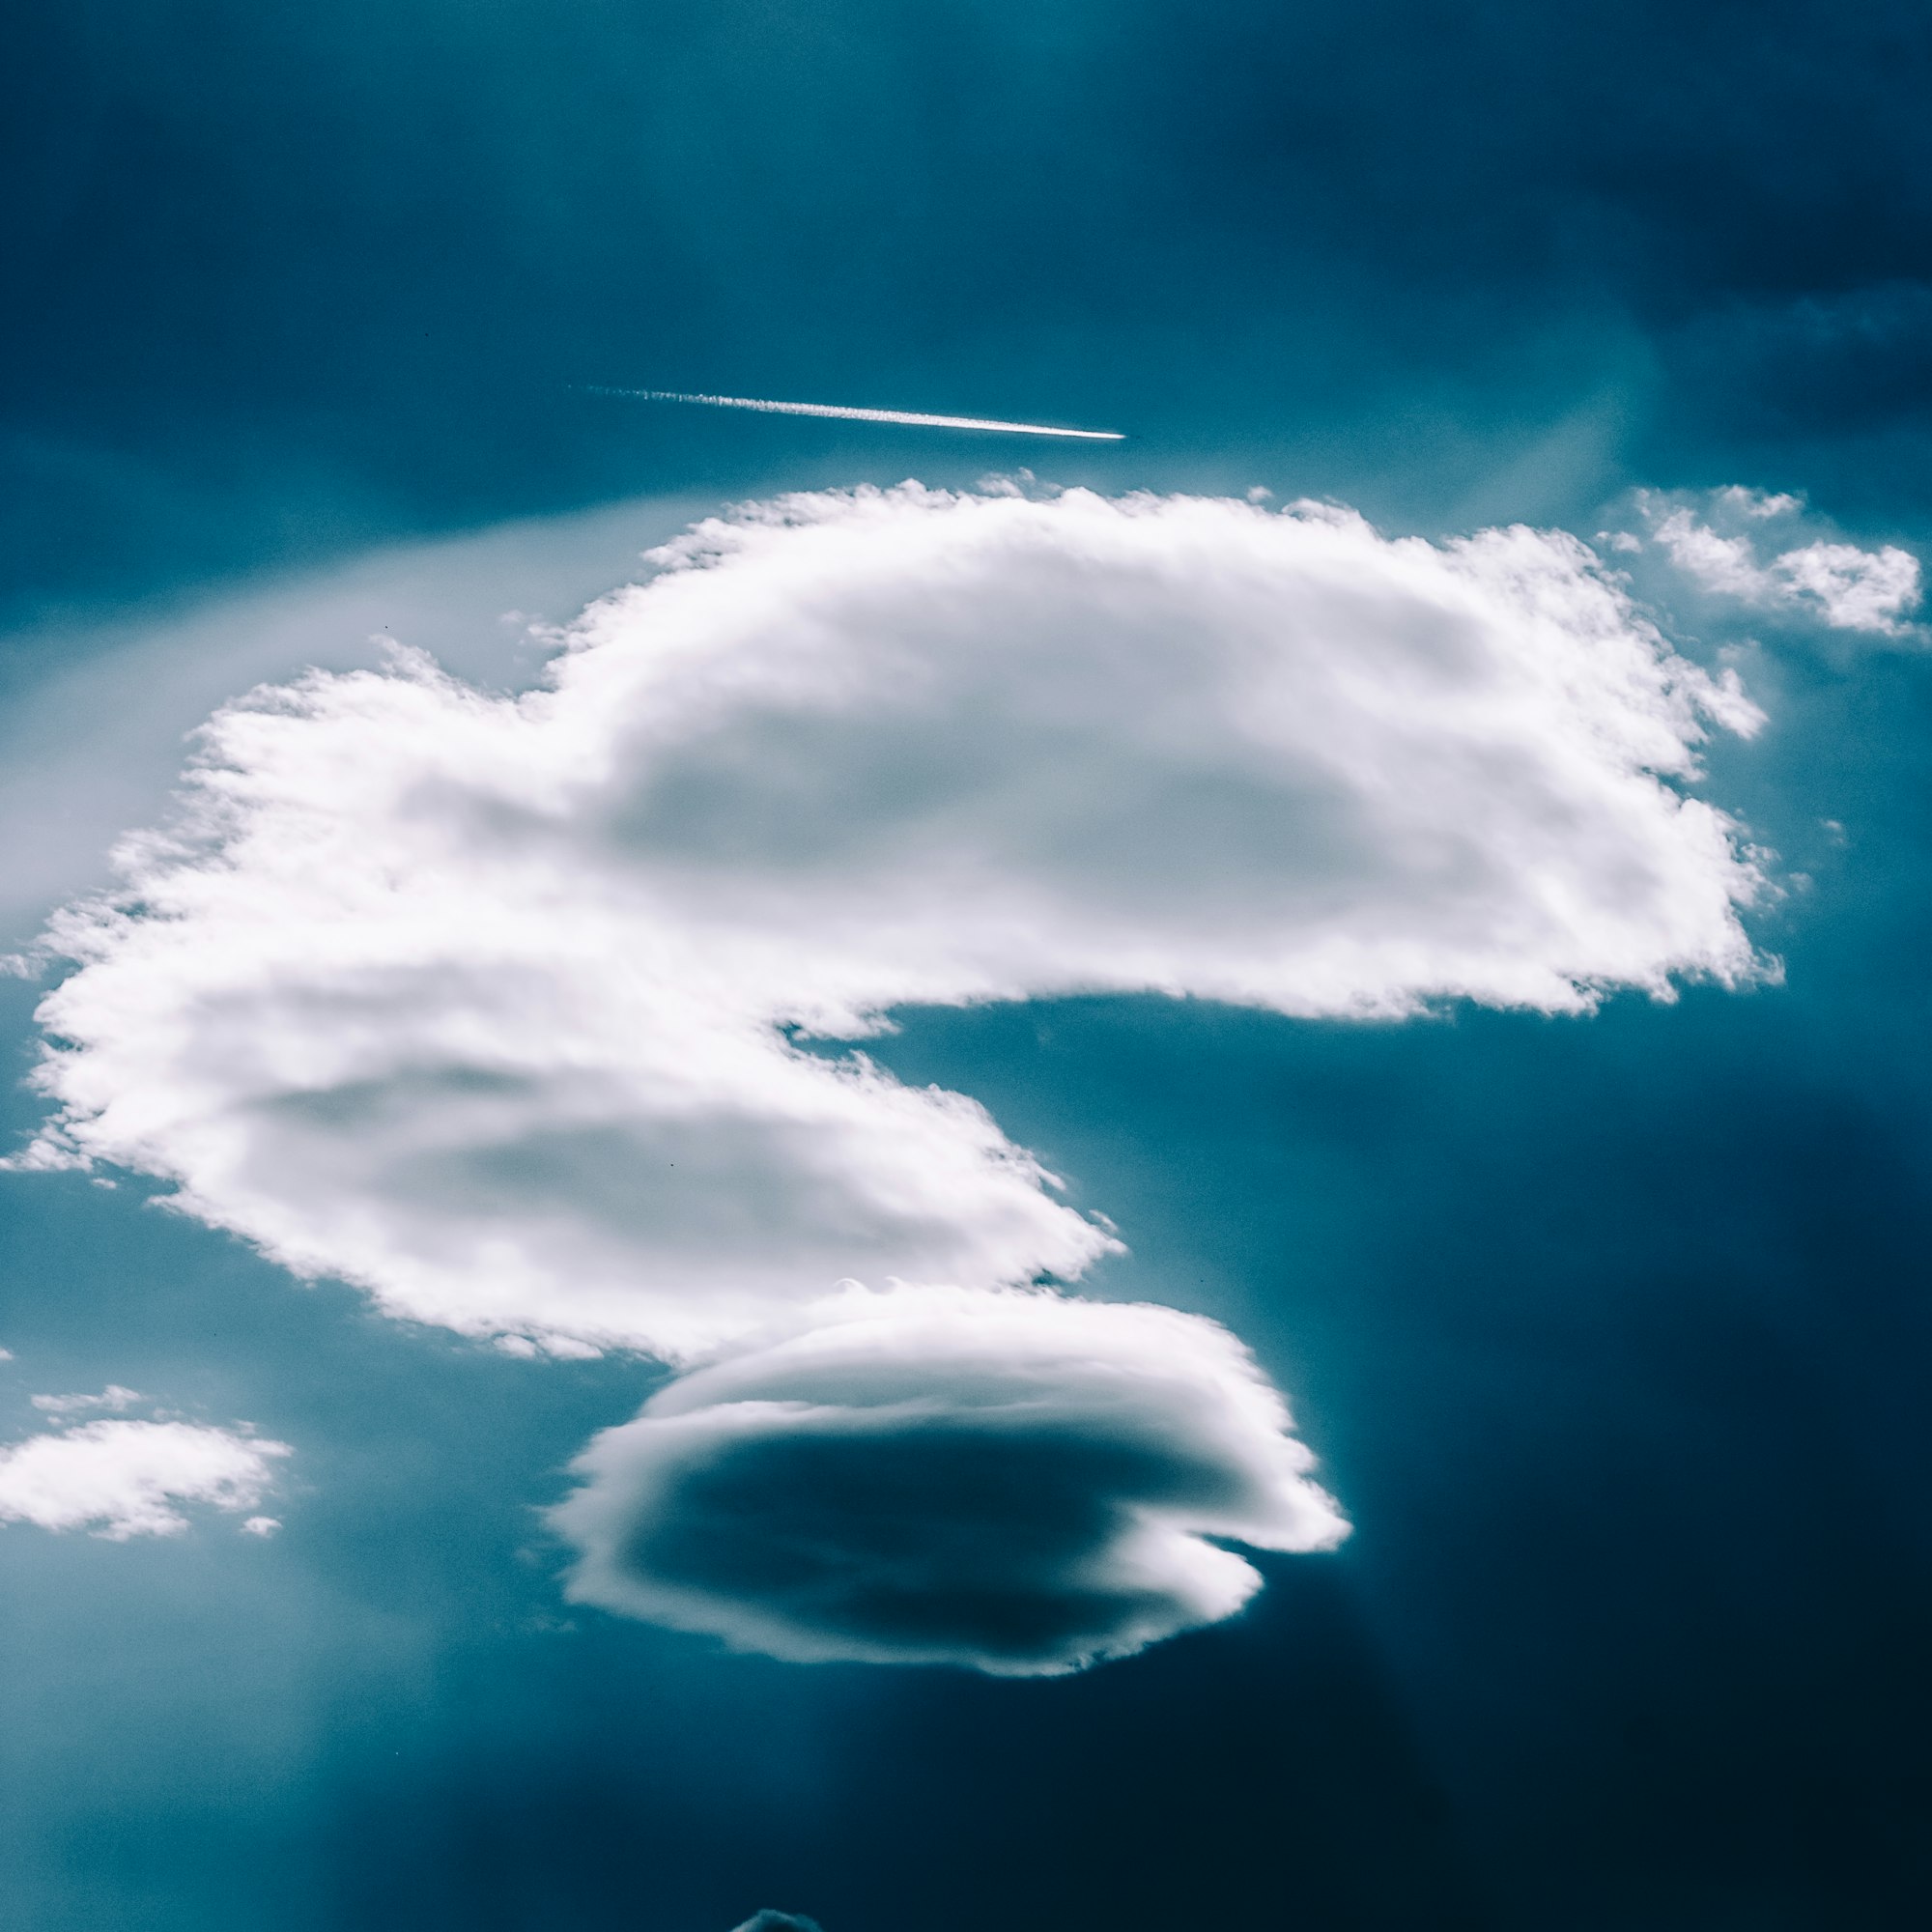 A quite interesting shape for a cloud…